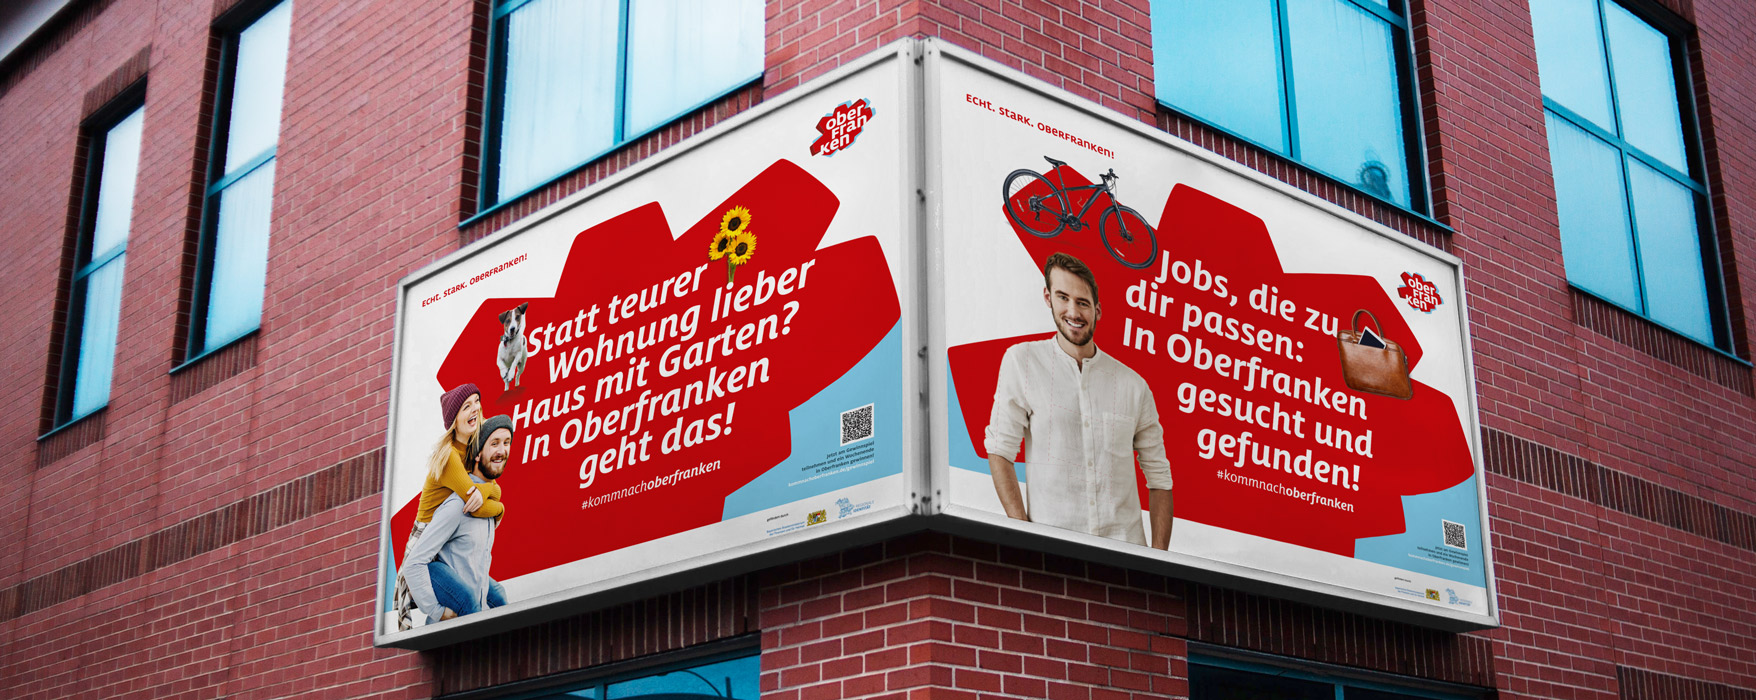 Oberfranken Offensiv Kampagne Plakat